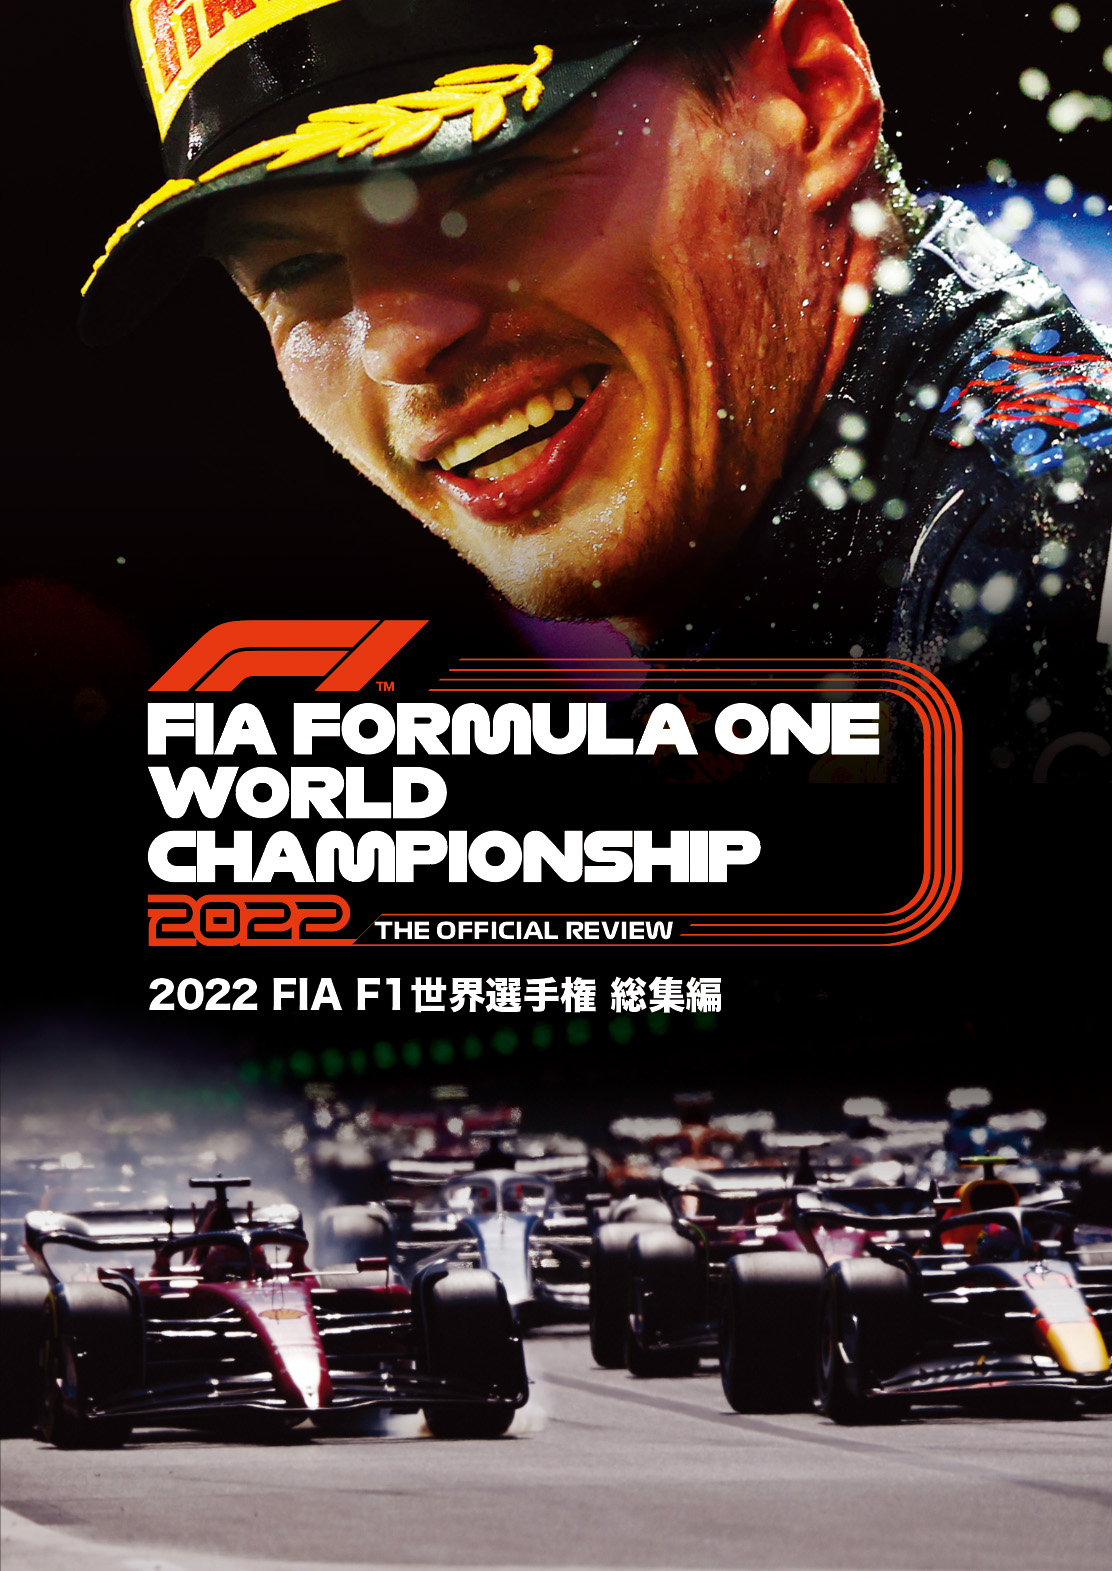 2007 FIA F1世界選手権 総集編 完全日本語版 - ブルーレイ